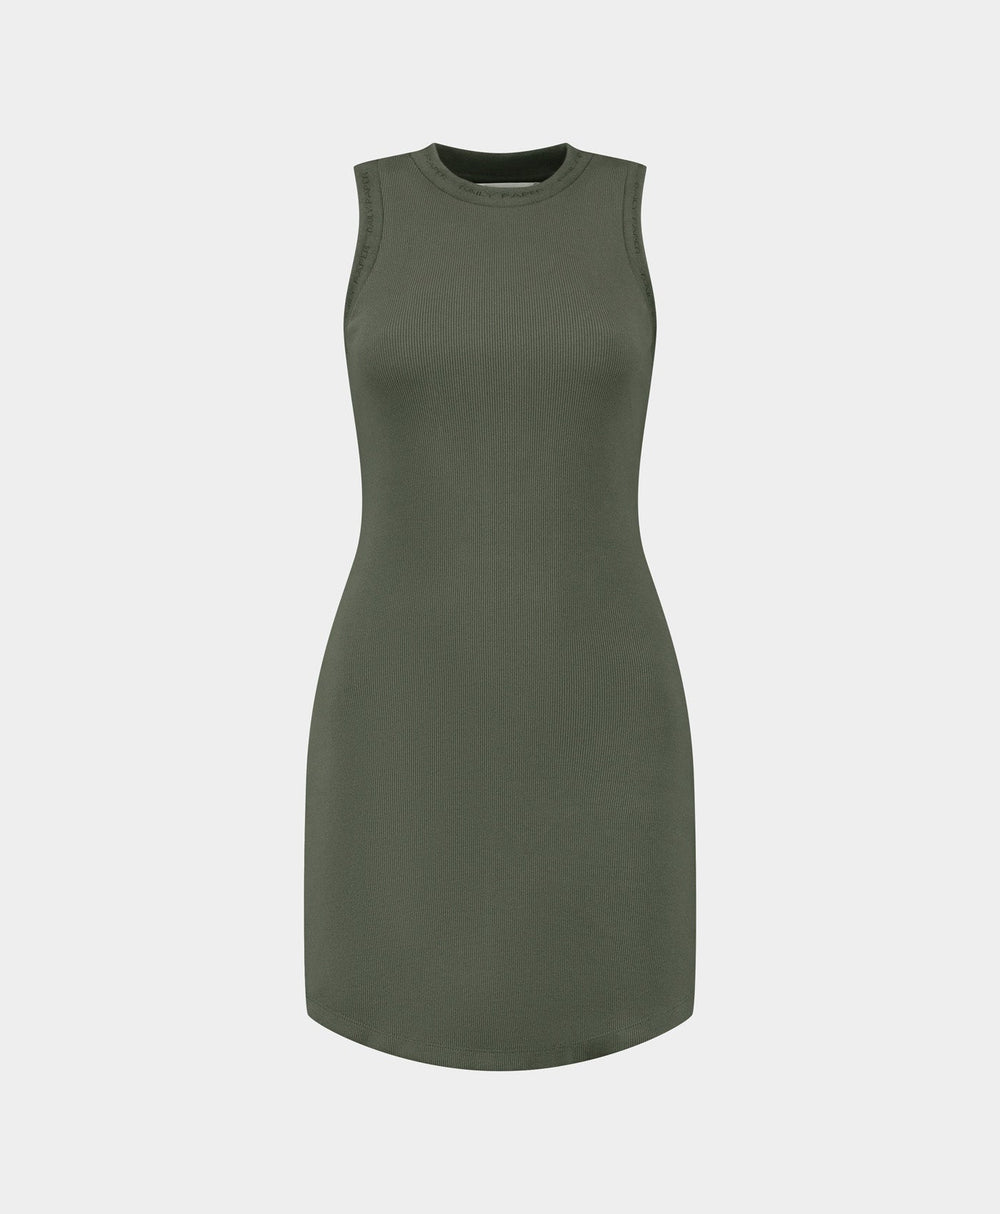 DP - Chimera Green Erib Tank Dress - Packshot - Front